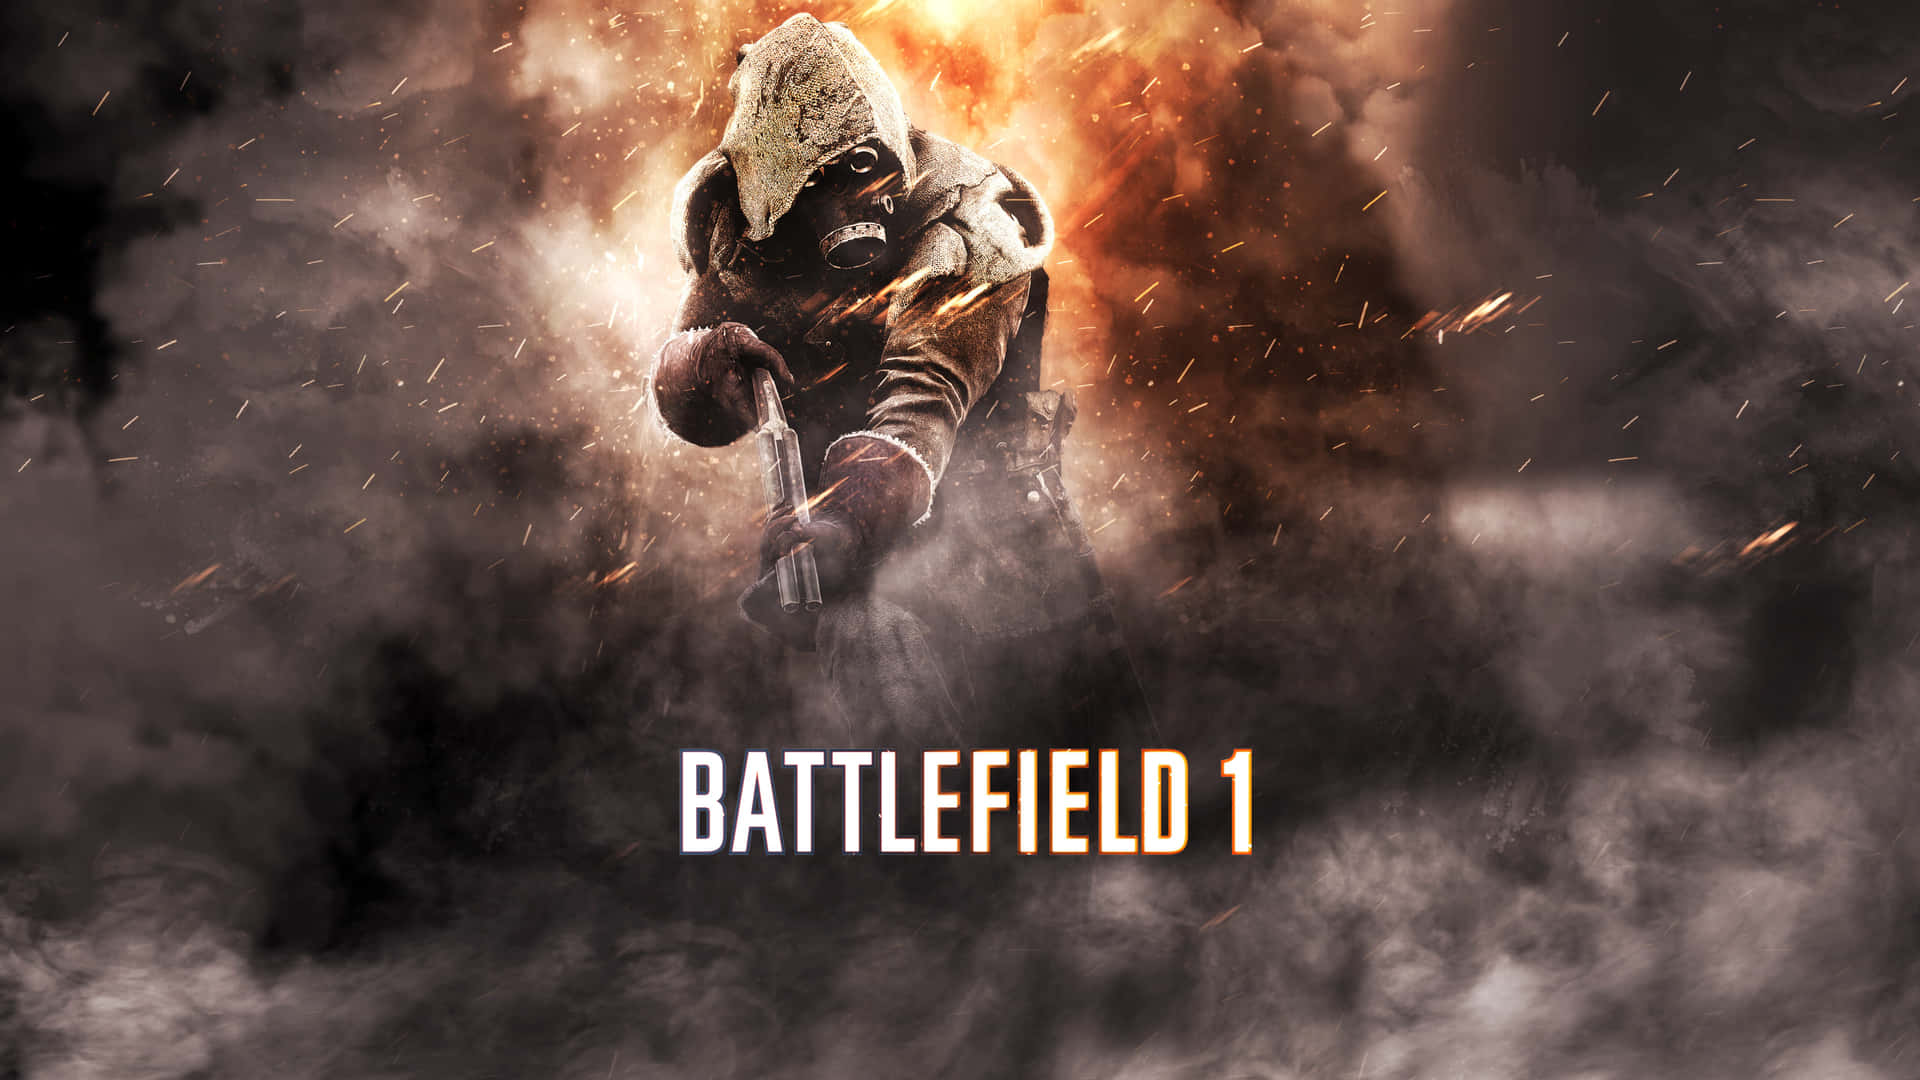 Stridi Det Stora Kriget: Upplev Battlefield 1